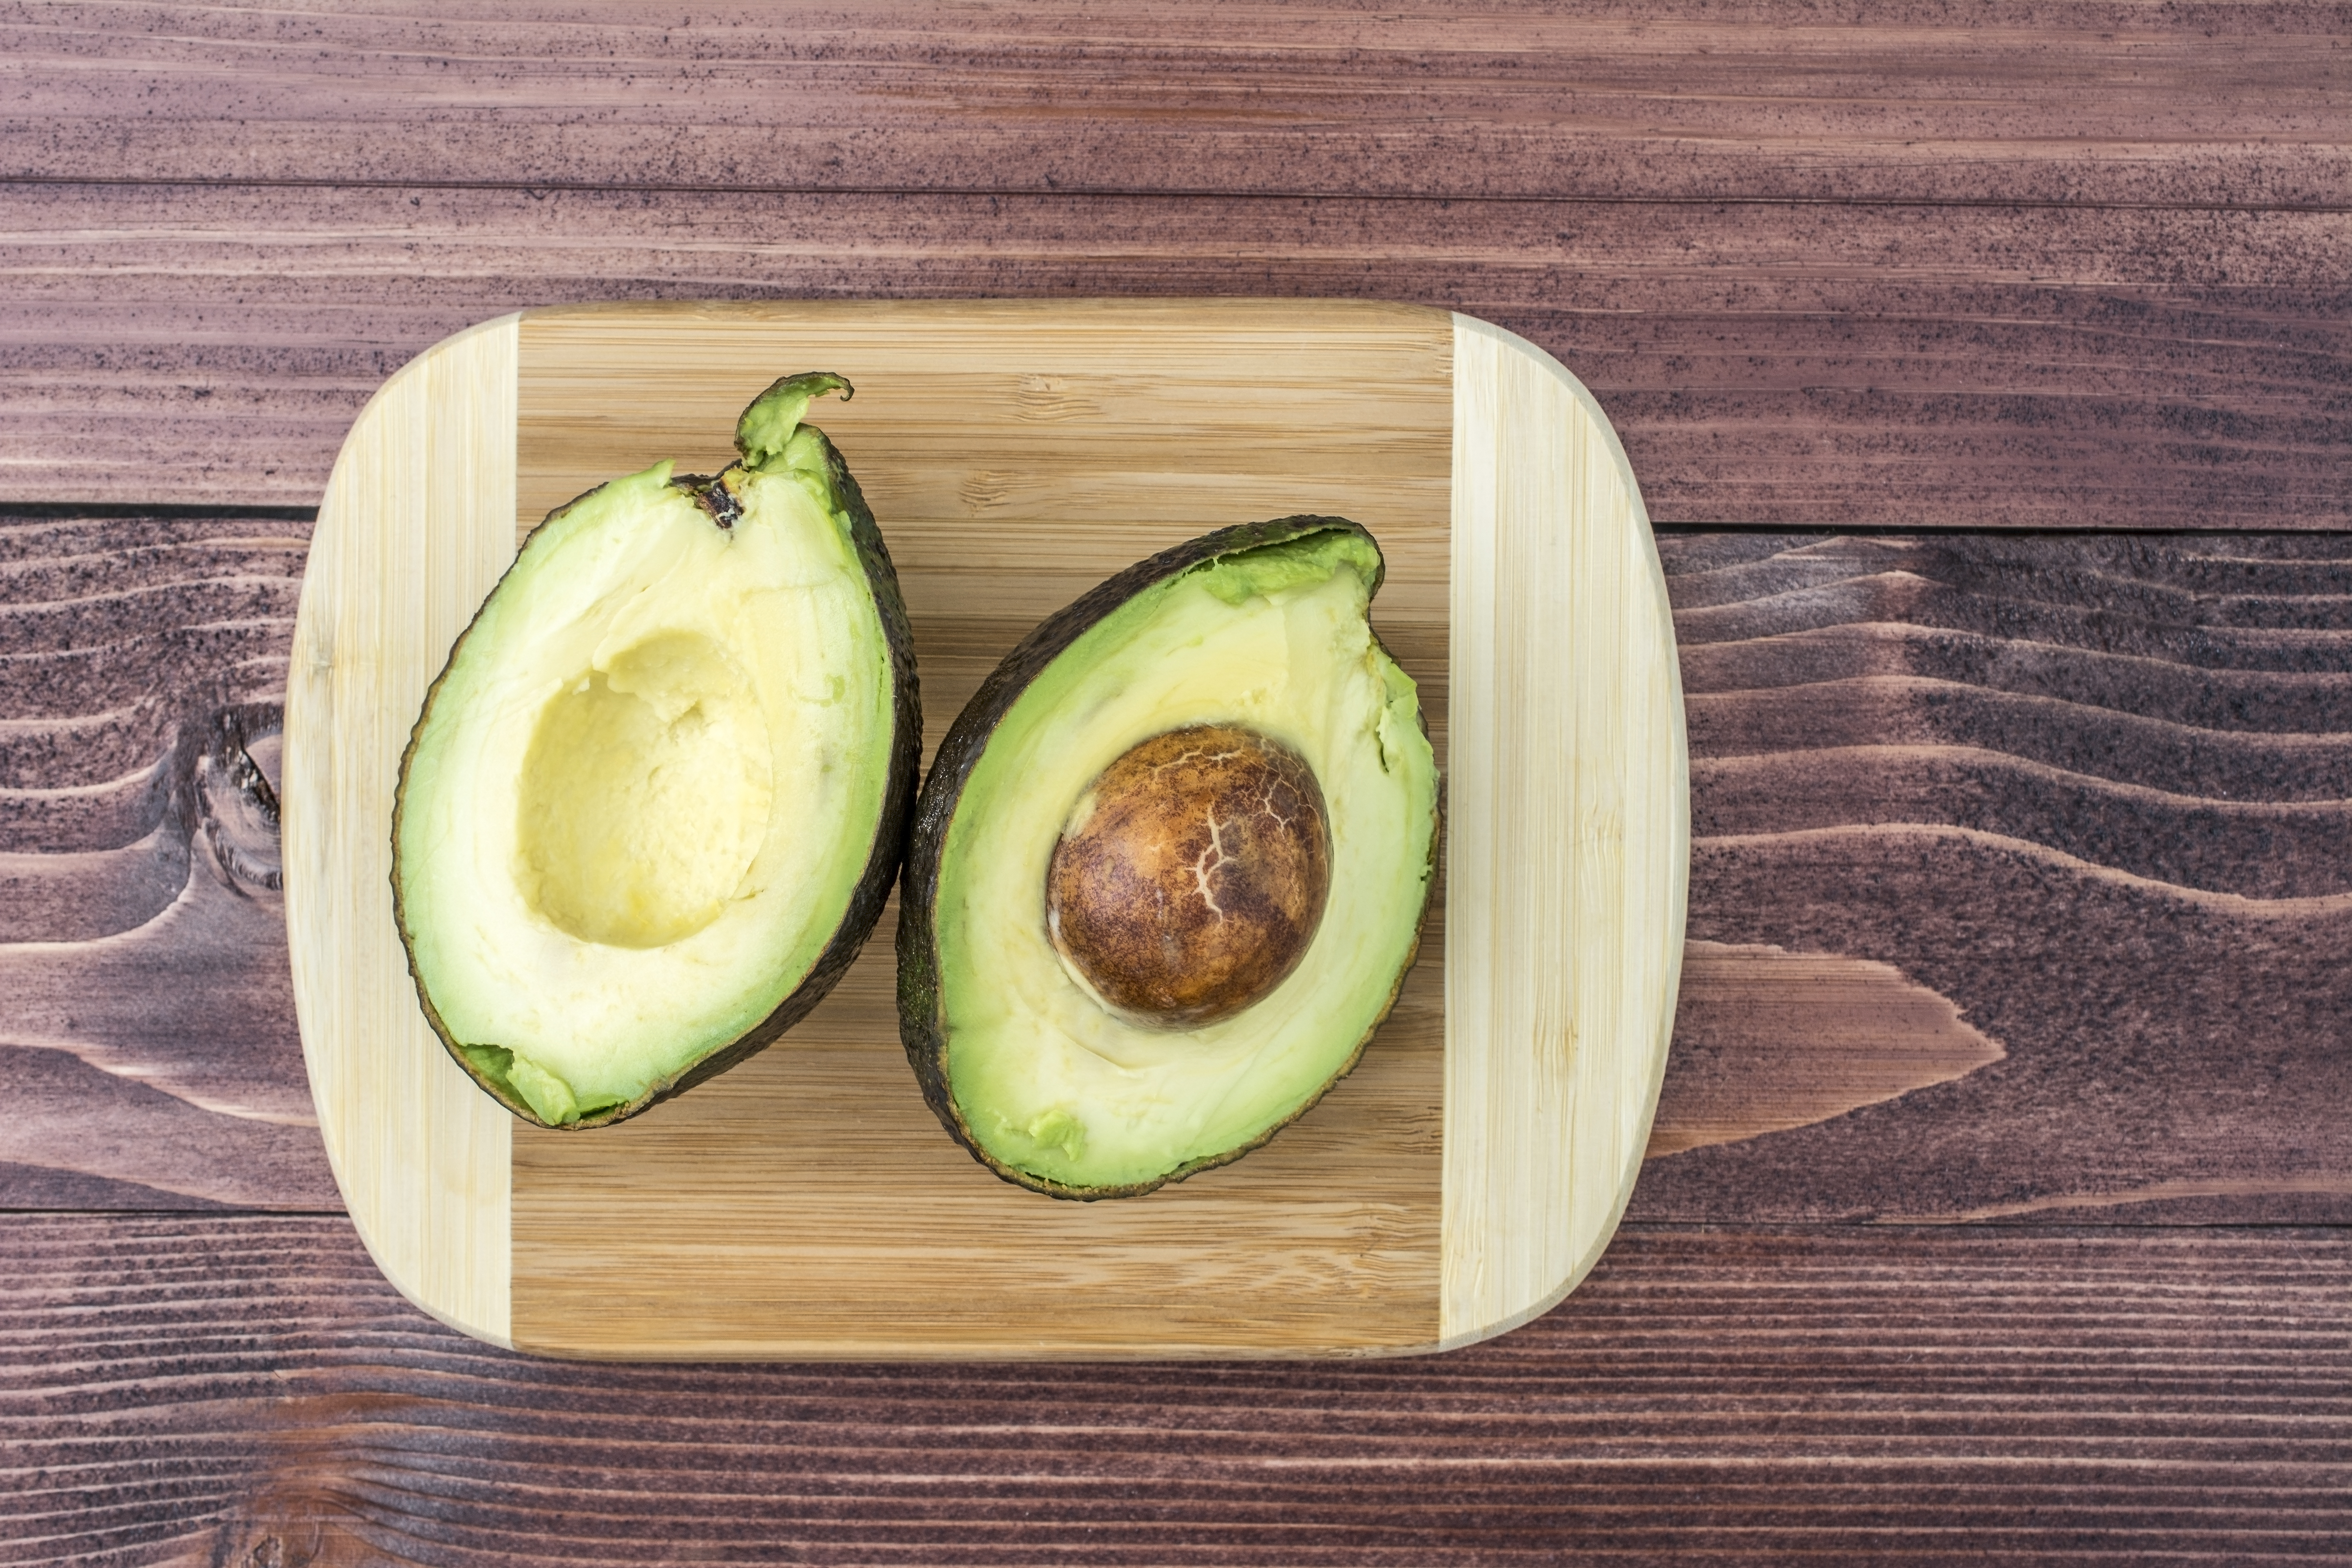 How to cut an avocado